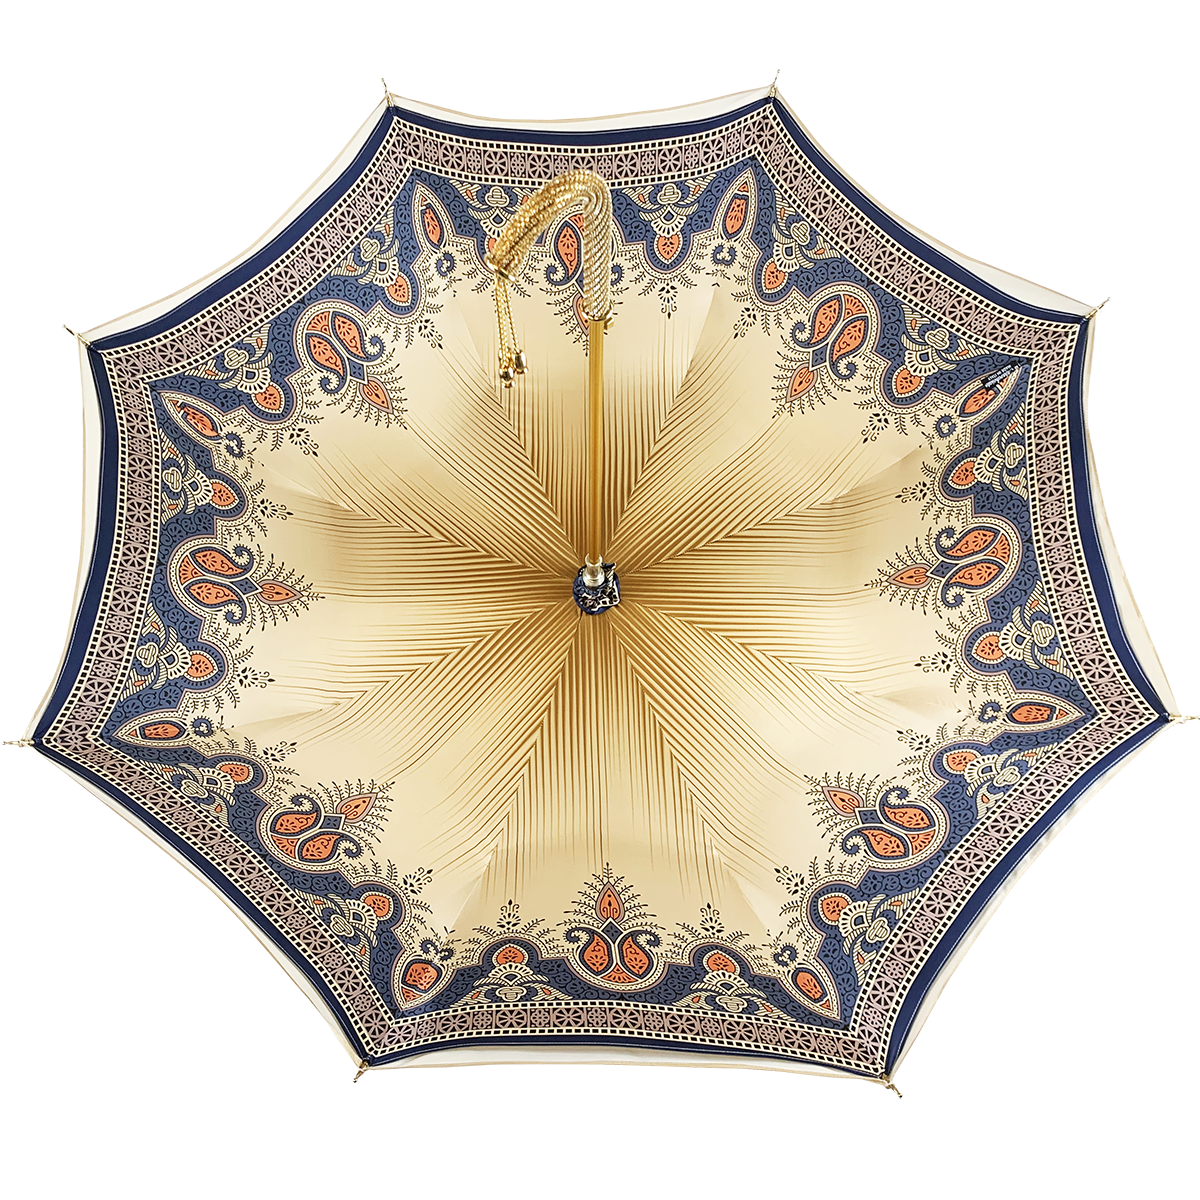 Golden Umbrella in a Fancy design